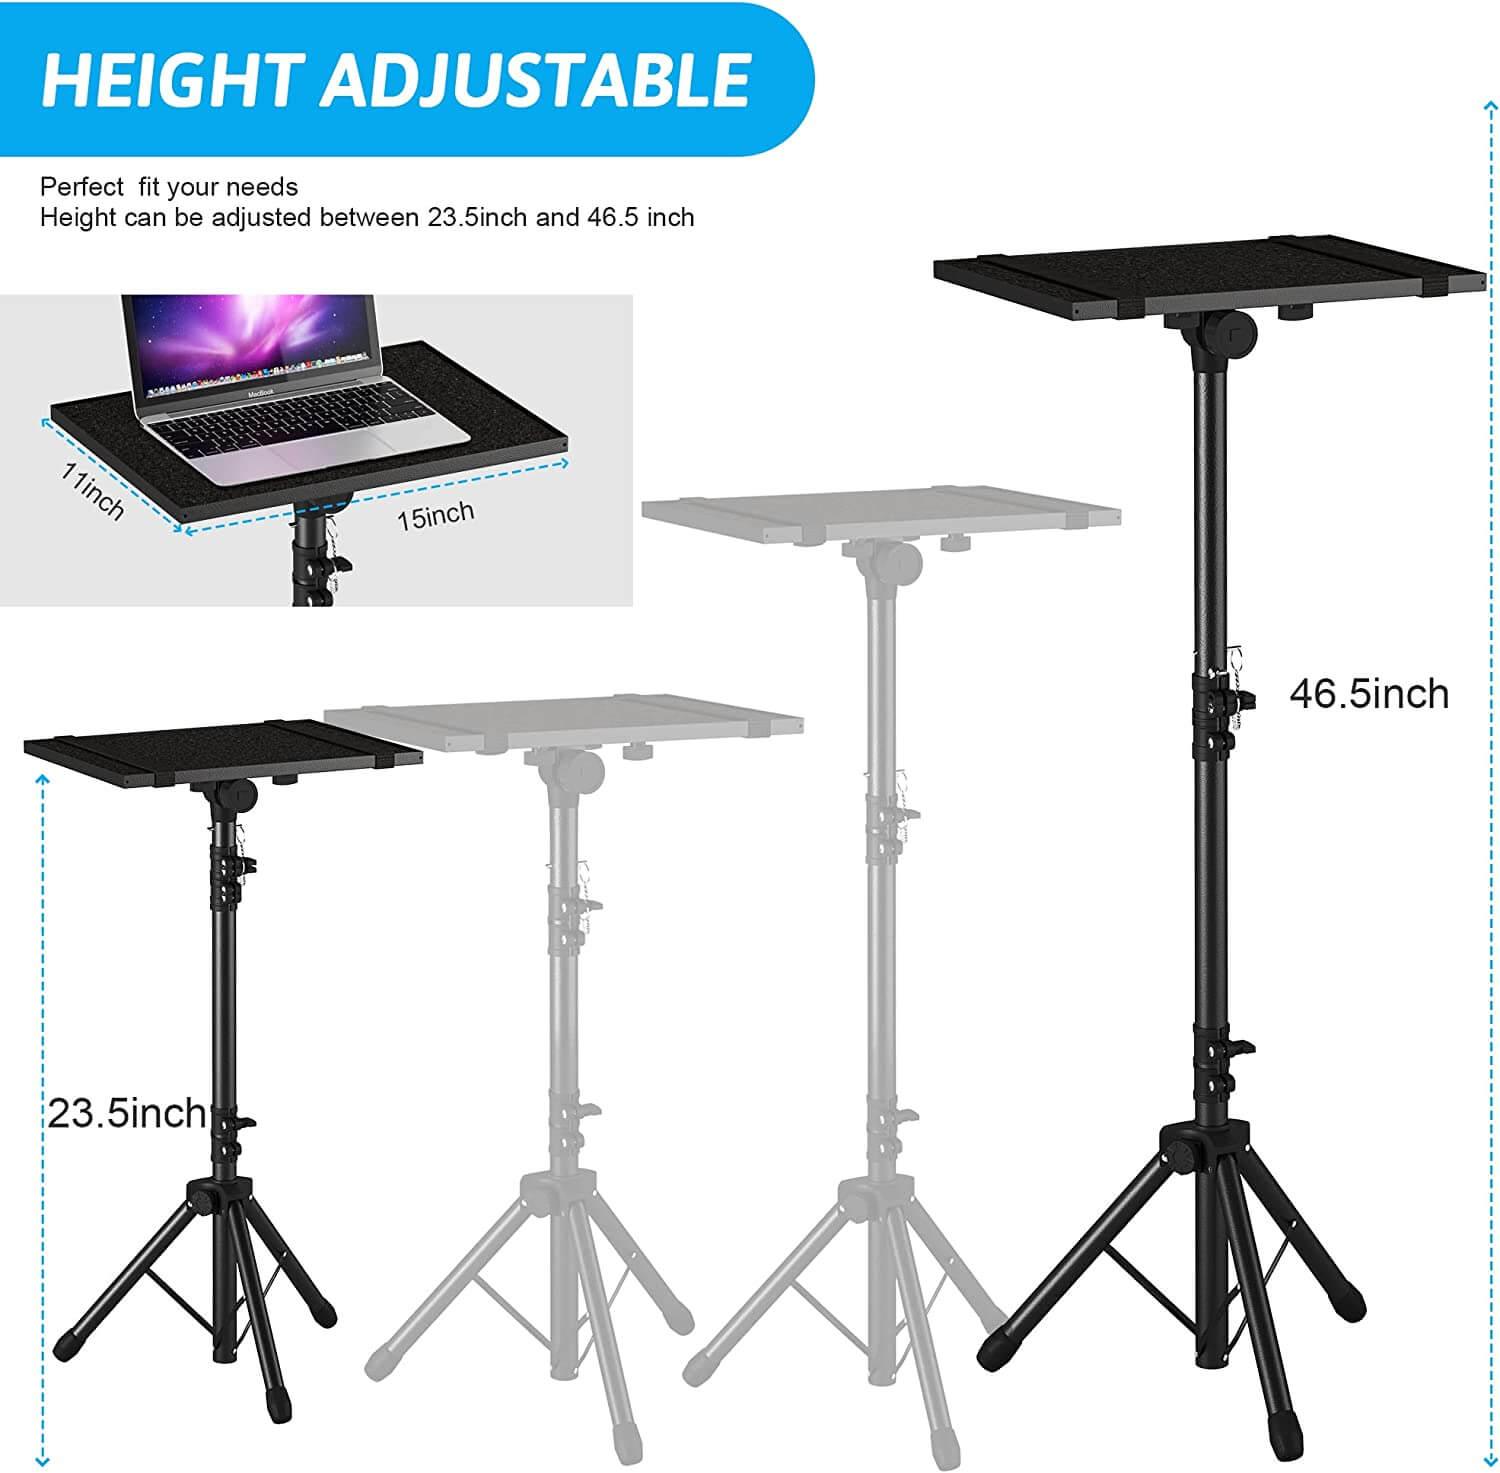 Laptop & Projector Tripod Floor Stand Adjustable Height 2- 4 feet - GADGET WAGON